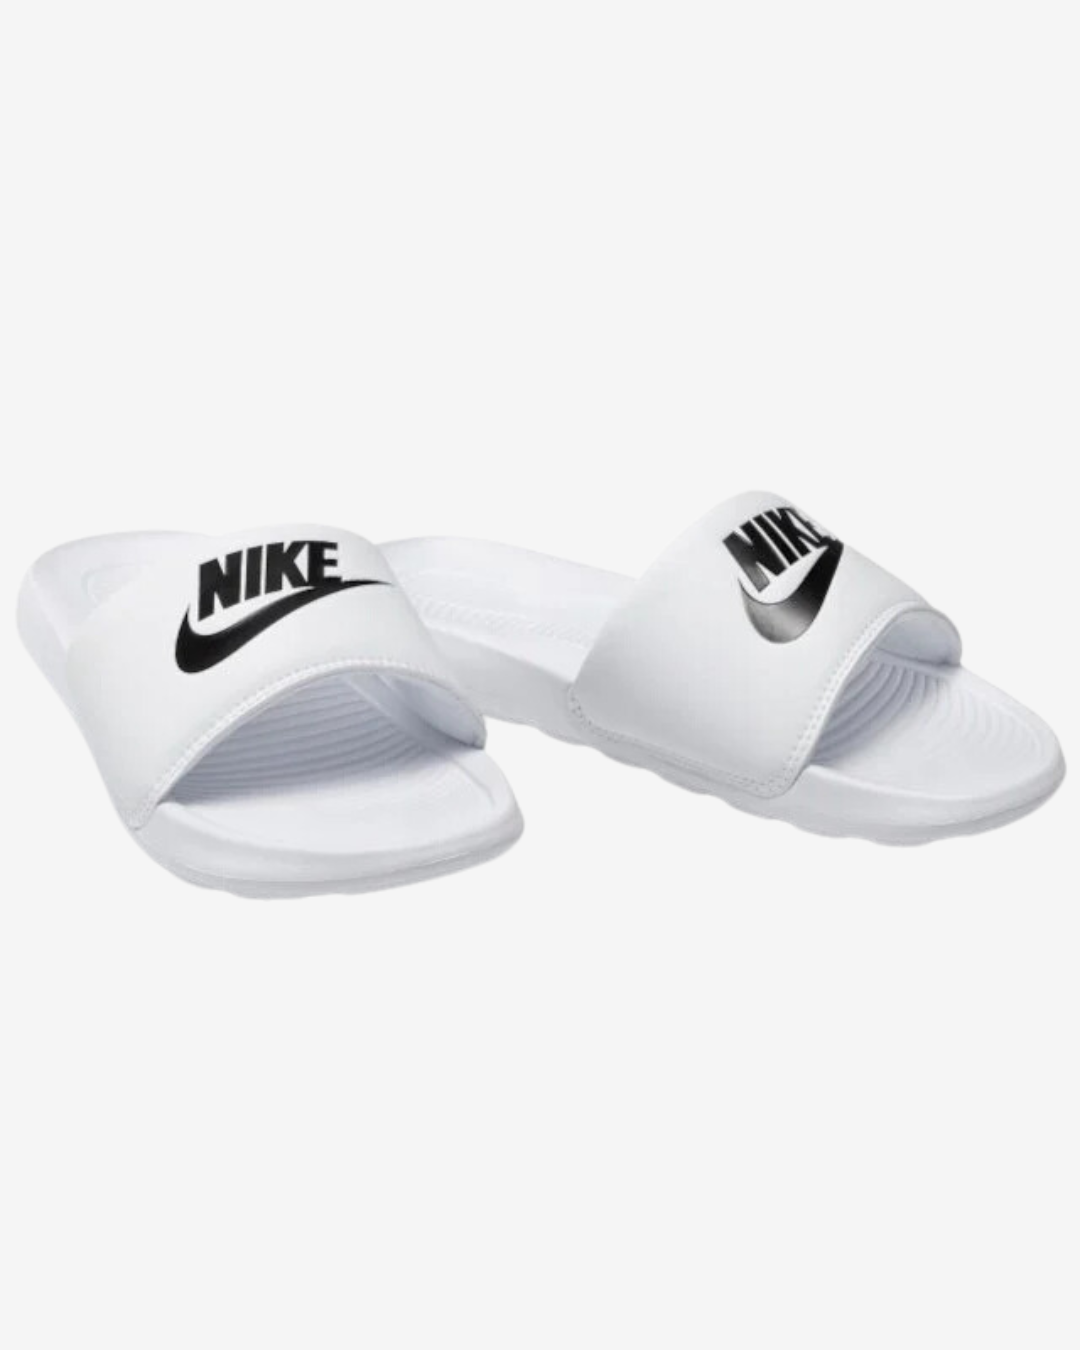 Nike Victori slippers - Hvid - Str. 38 - Modish.dk